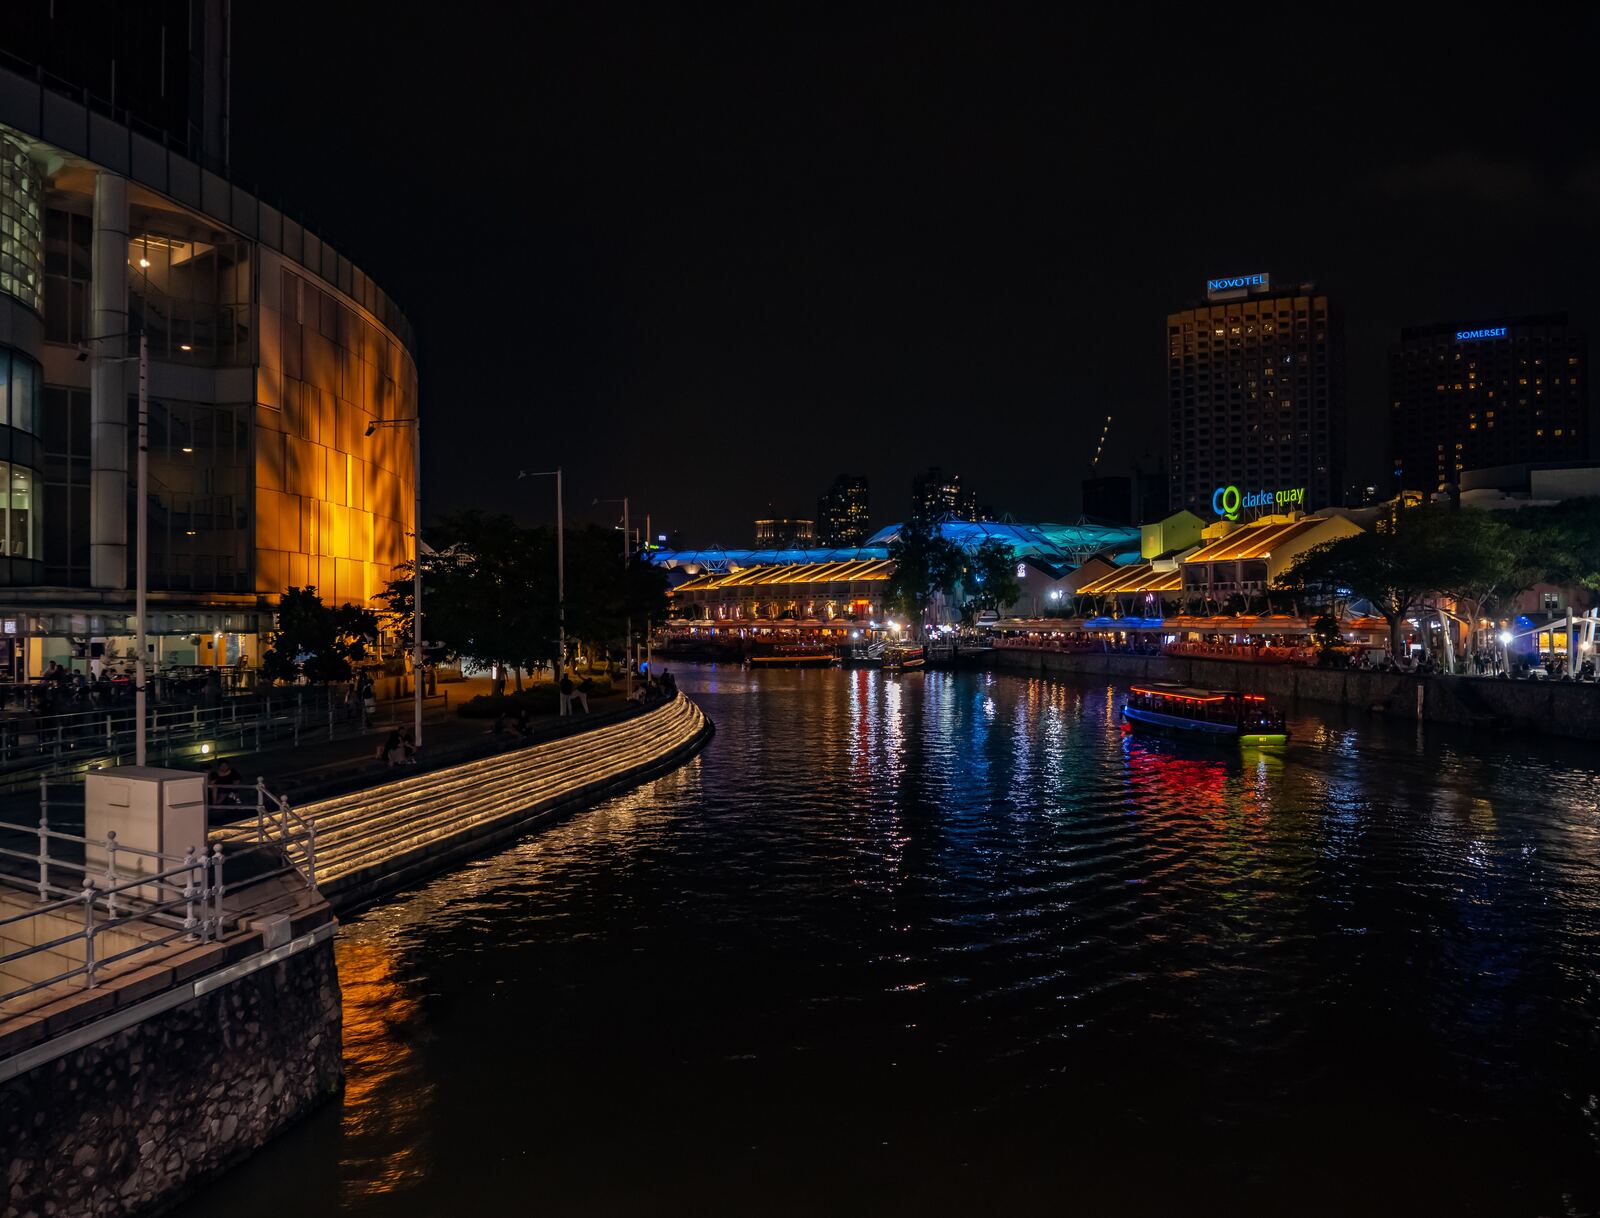 Image of Clarke Quay by Team PhotoHound